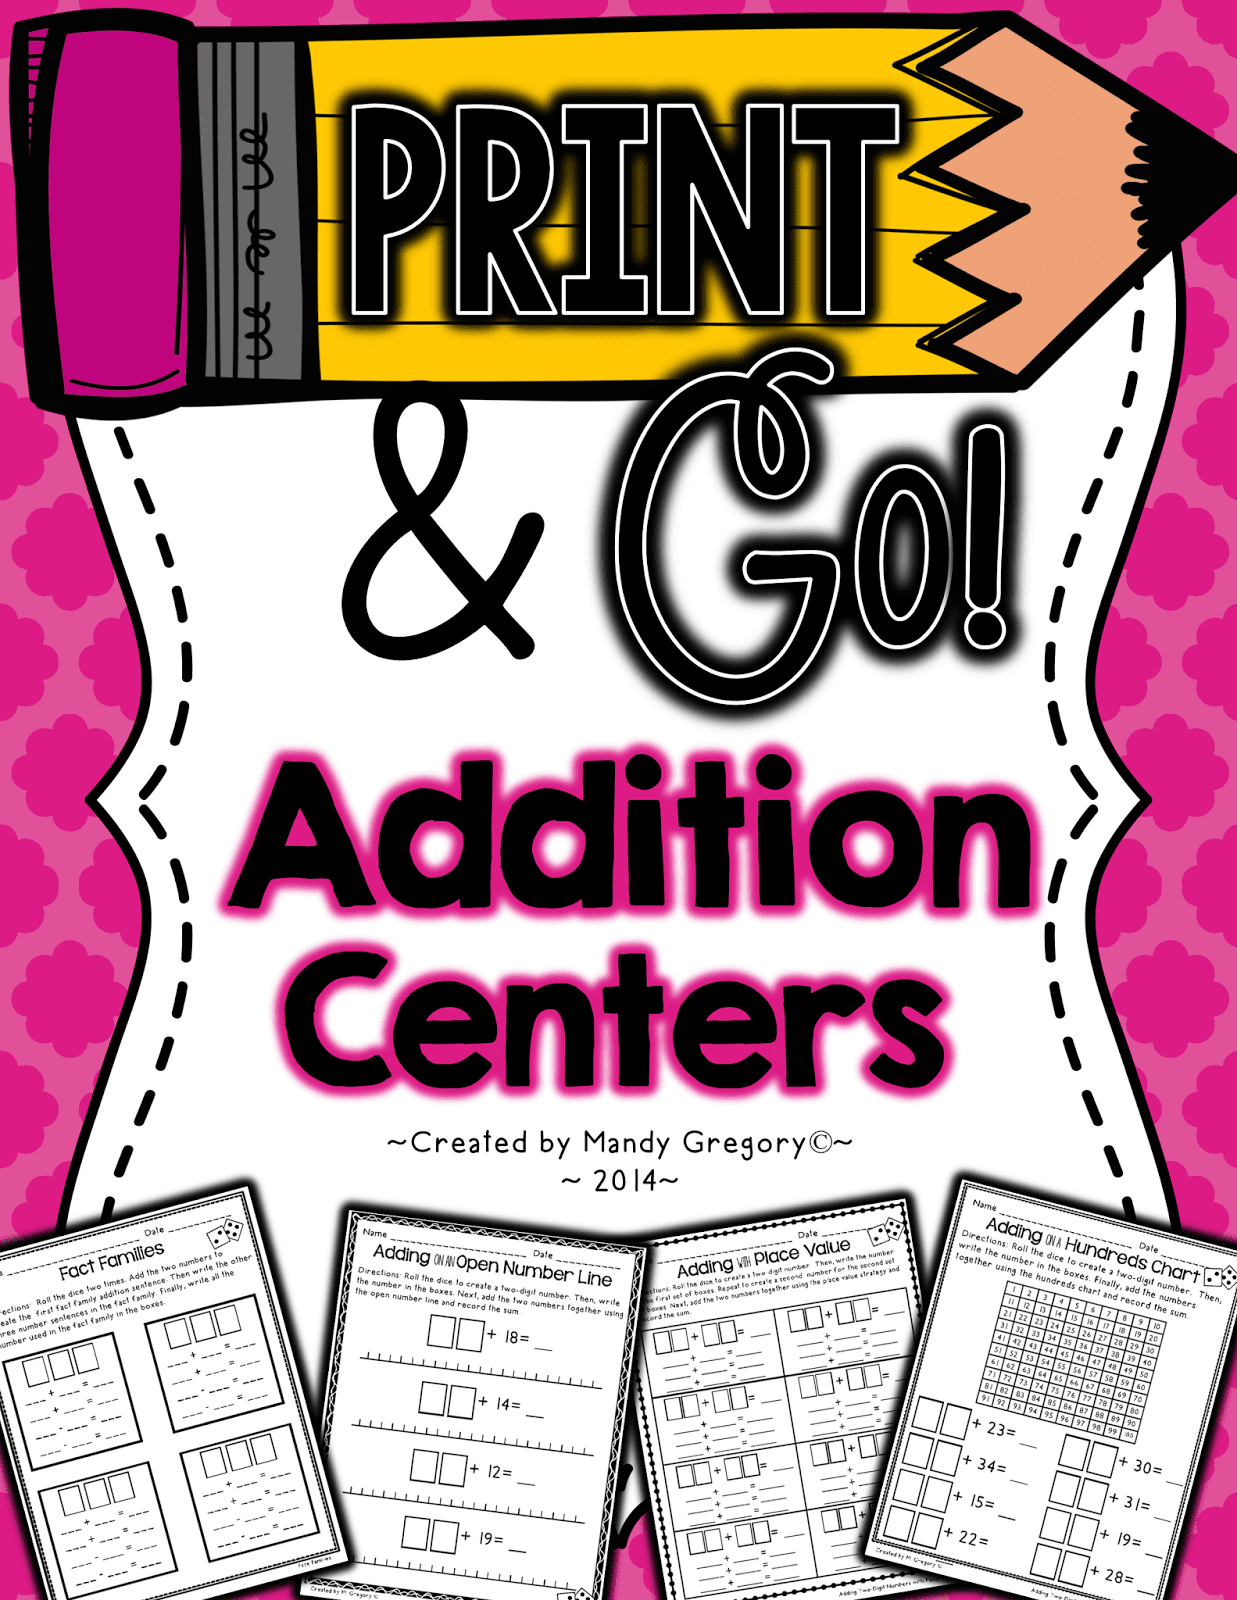 https://www.teacherspayteachers.com/Product/Addition-Centers-Print-and-Go-Series-1443148